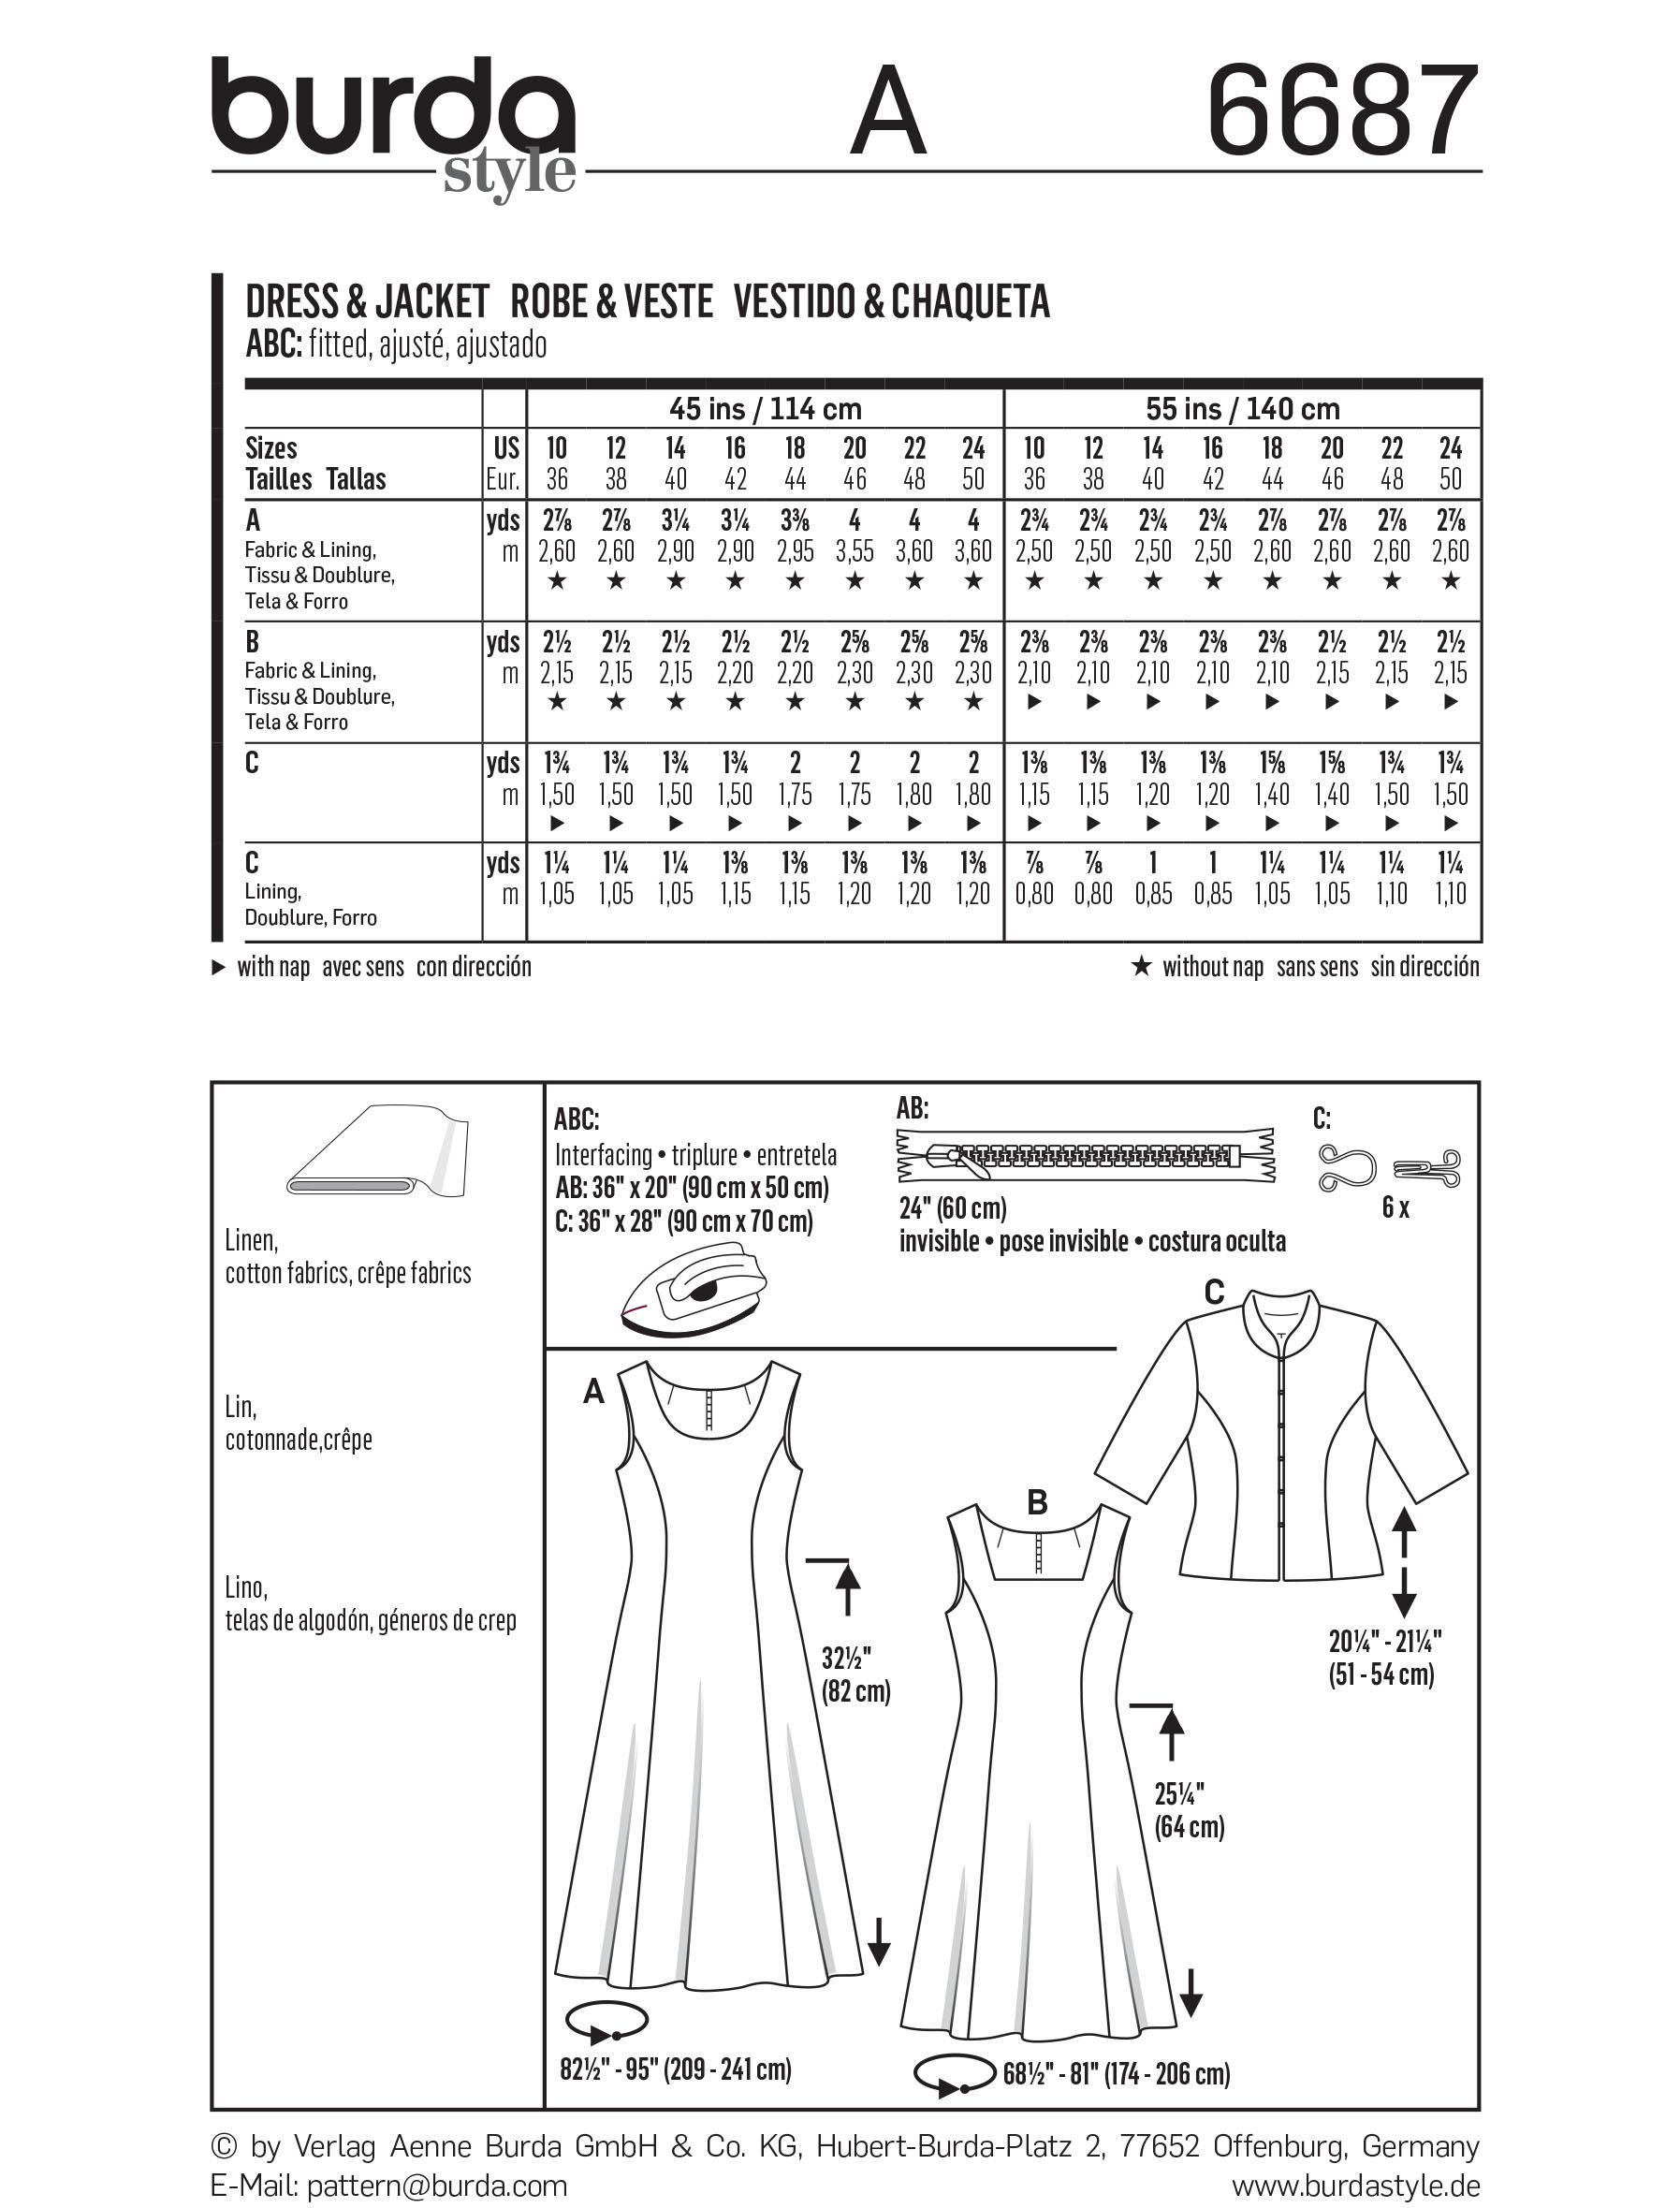 Burda B6687 Women's Dress & Jacket Sewing Pattern